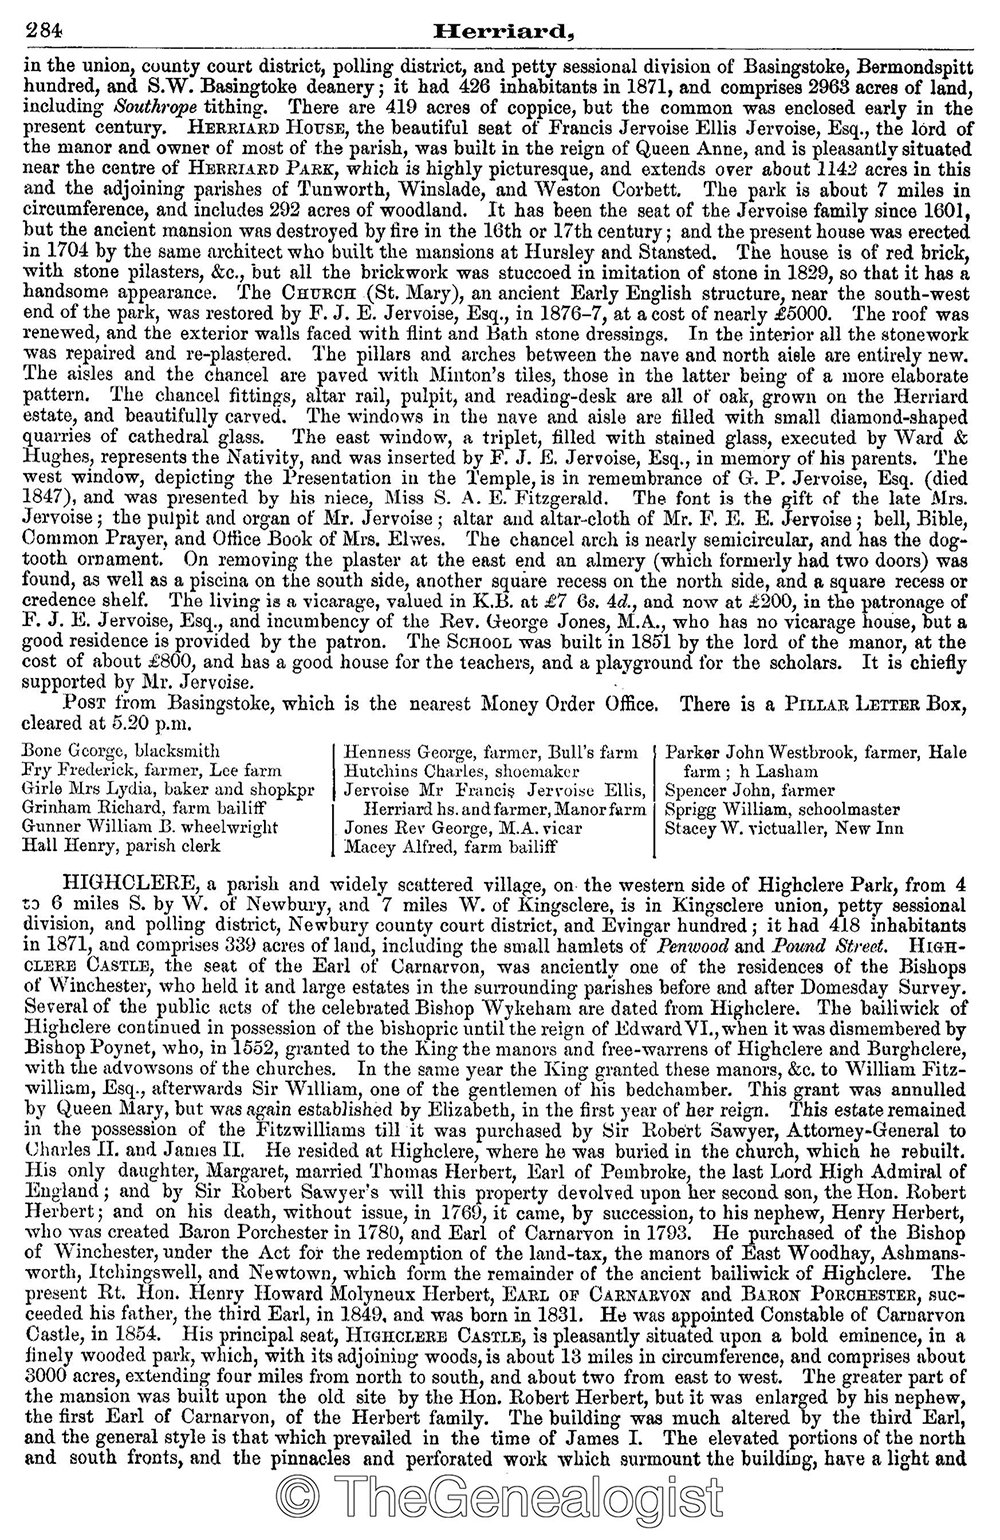 1878 White's Hampshire Directory